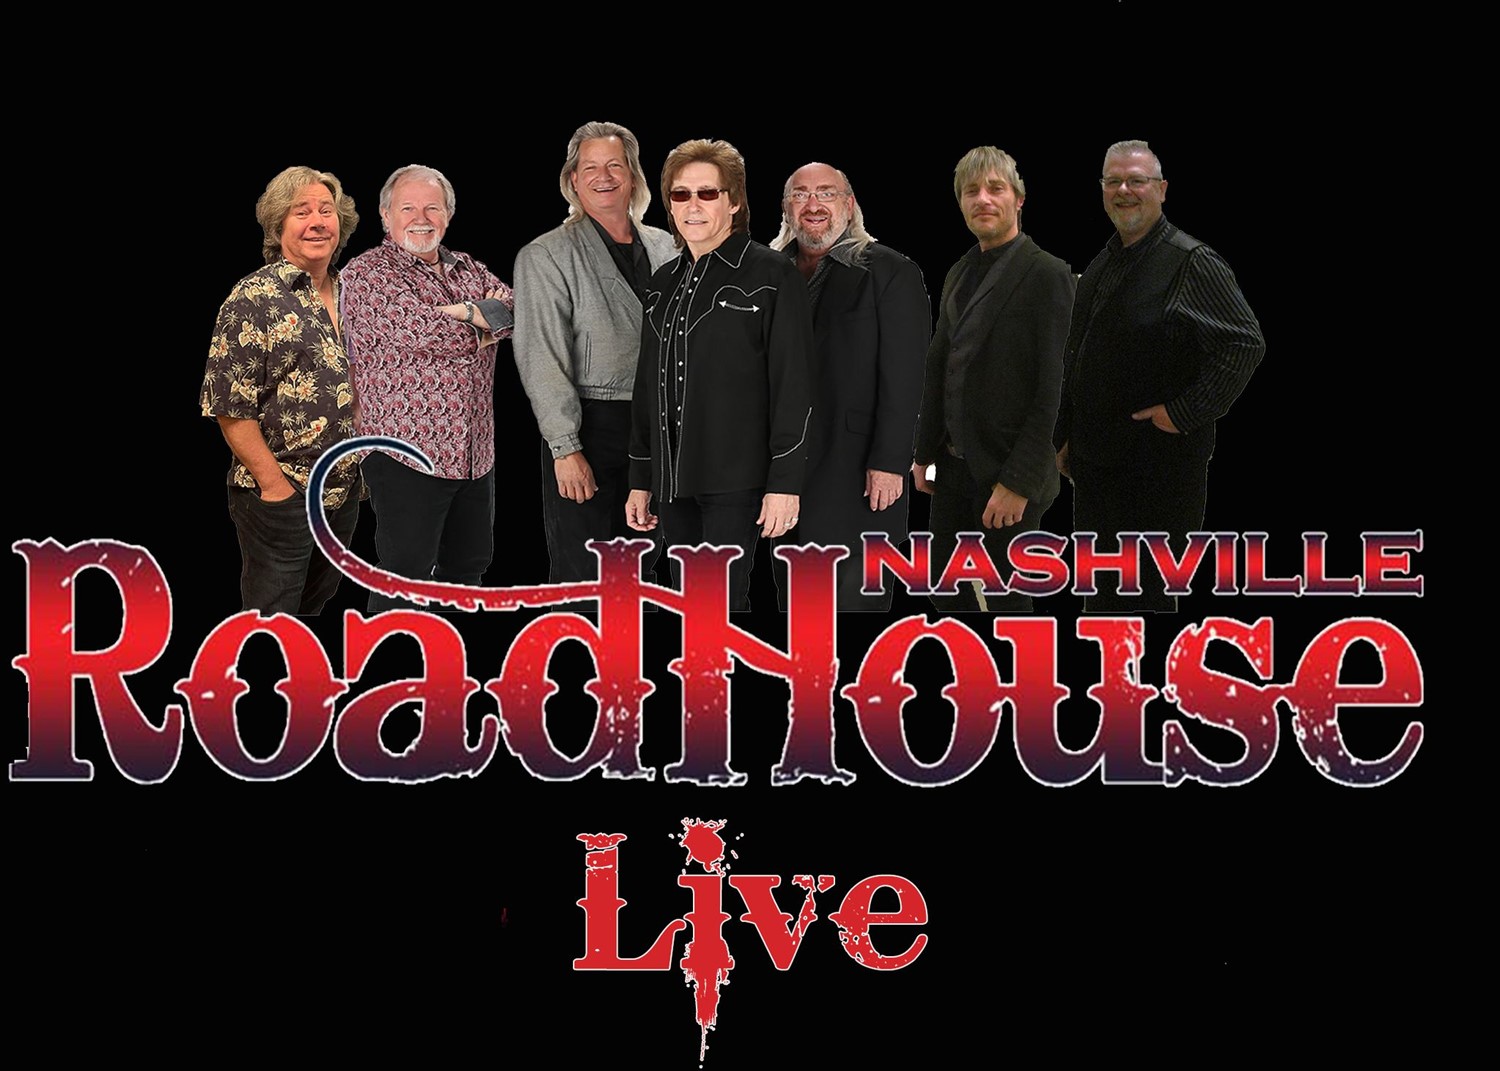 Nashville Roadhouse Live  on Dec 18, 00:00@Nashville Roadhouse Theater at The Branson Star - Pick a seat, Buy tickets and Get information on nashvilleroadhouse.com bransonstartheater